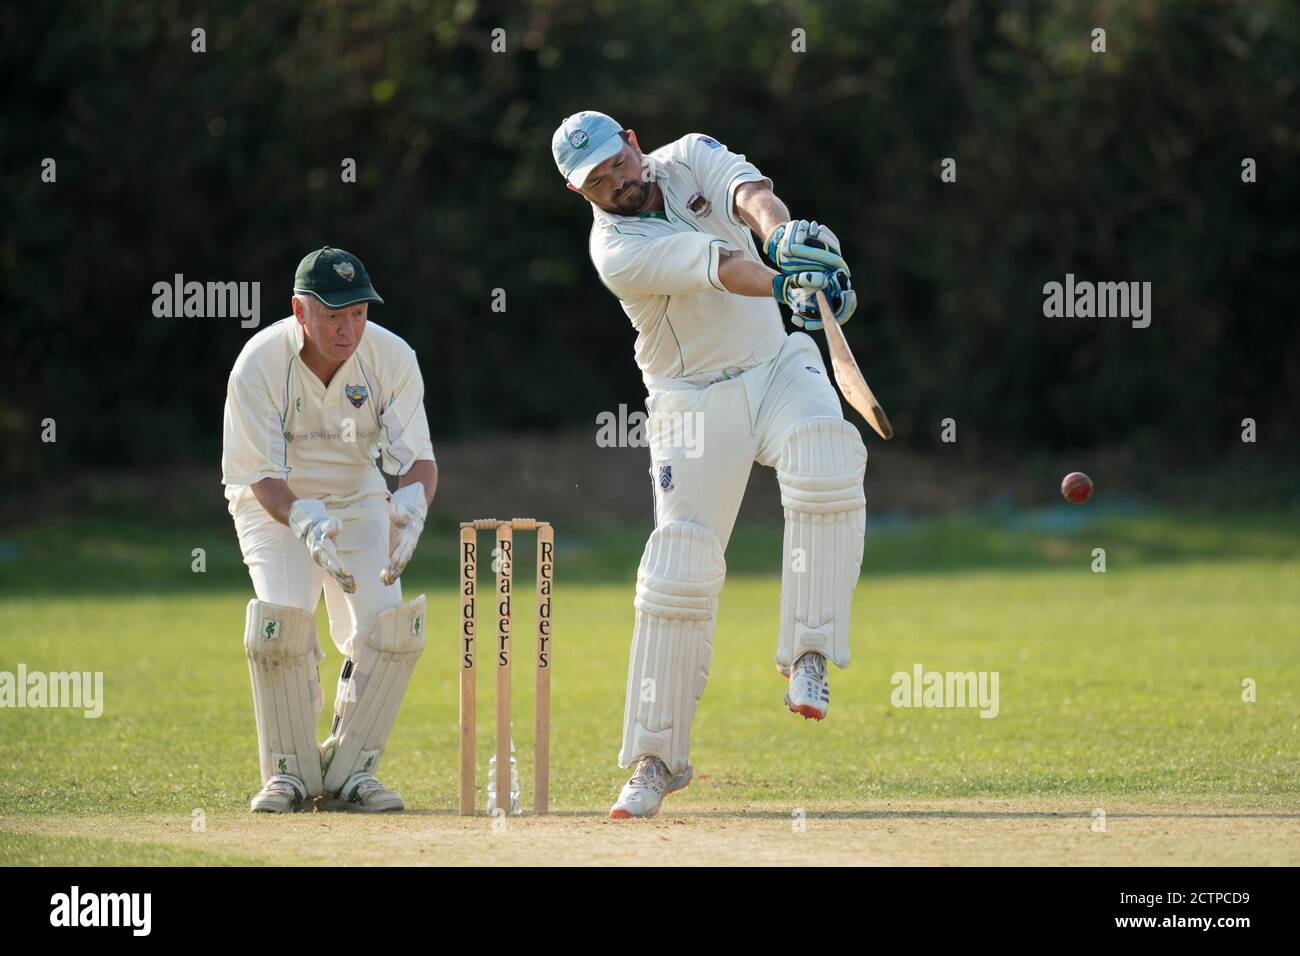 Batsman playing shot Stock Photo